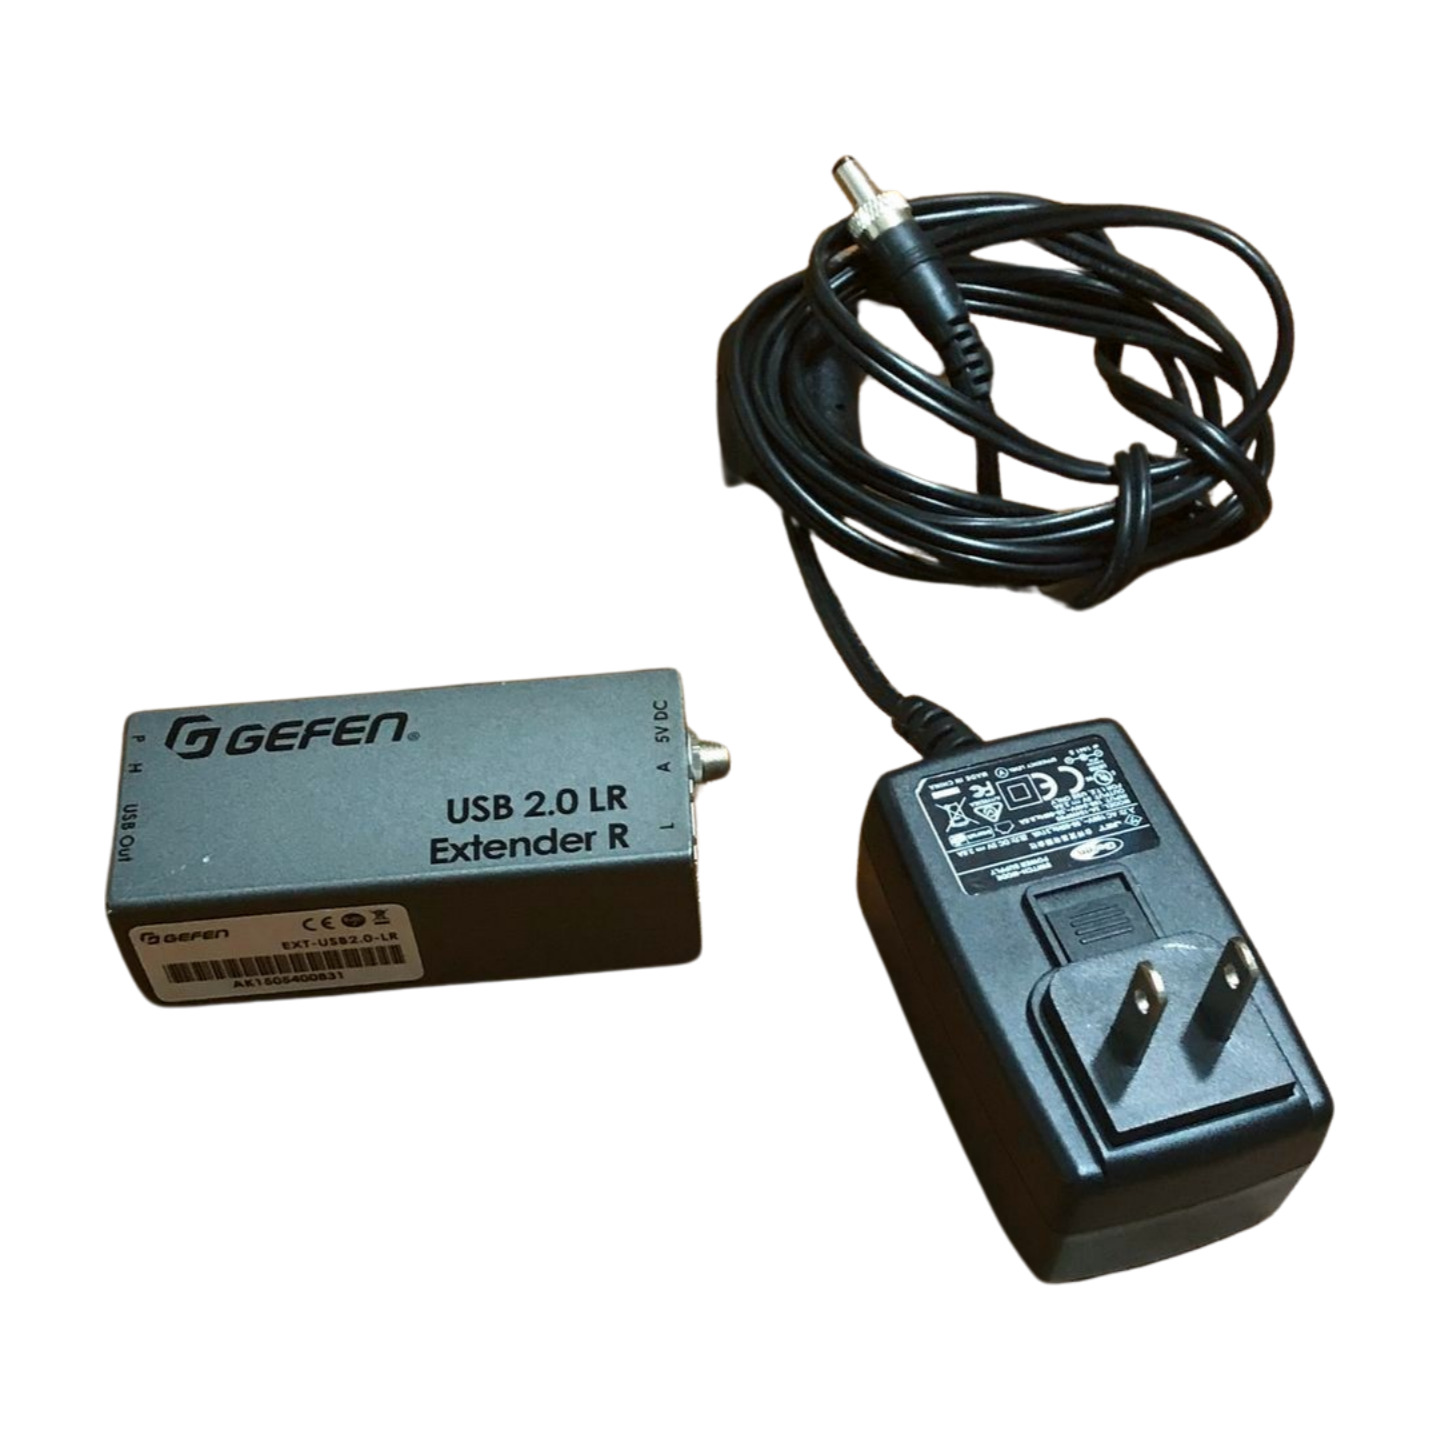 Gefen EXT-USB2.0-LR Extender R with AC Power Adapter